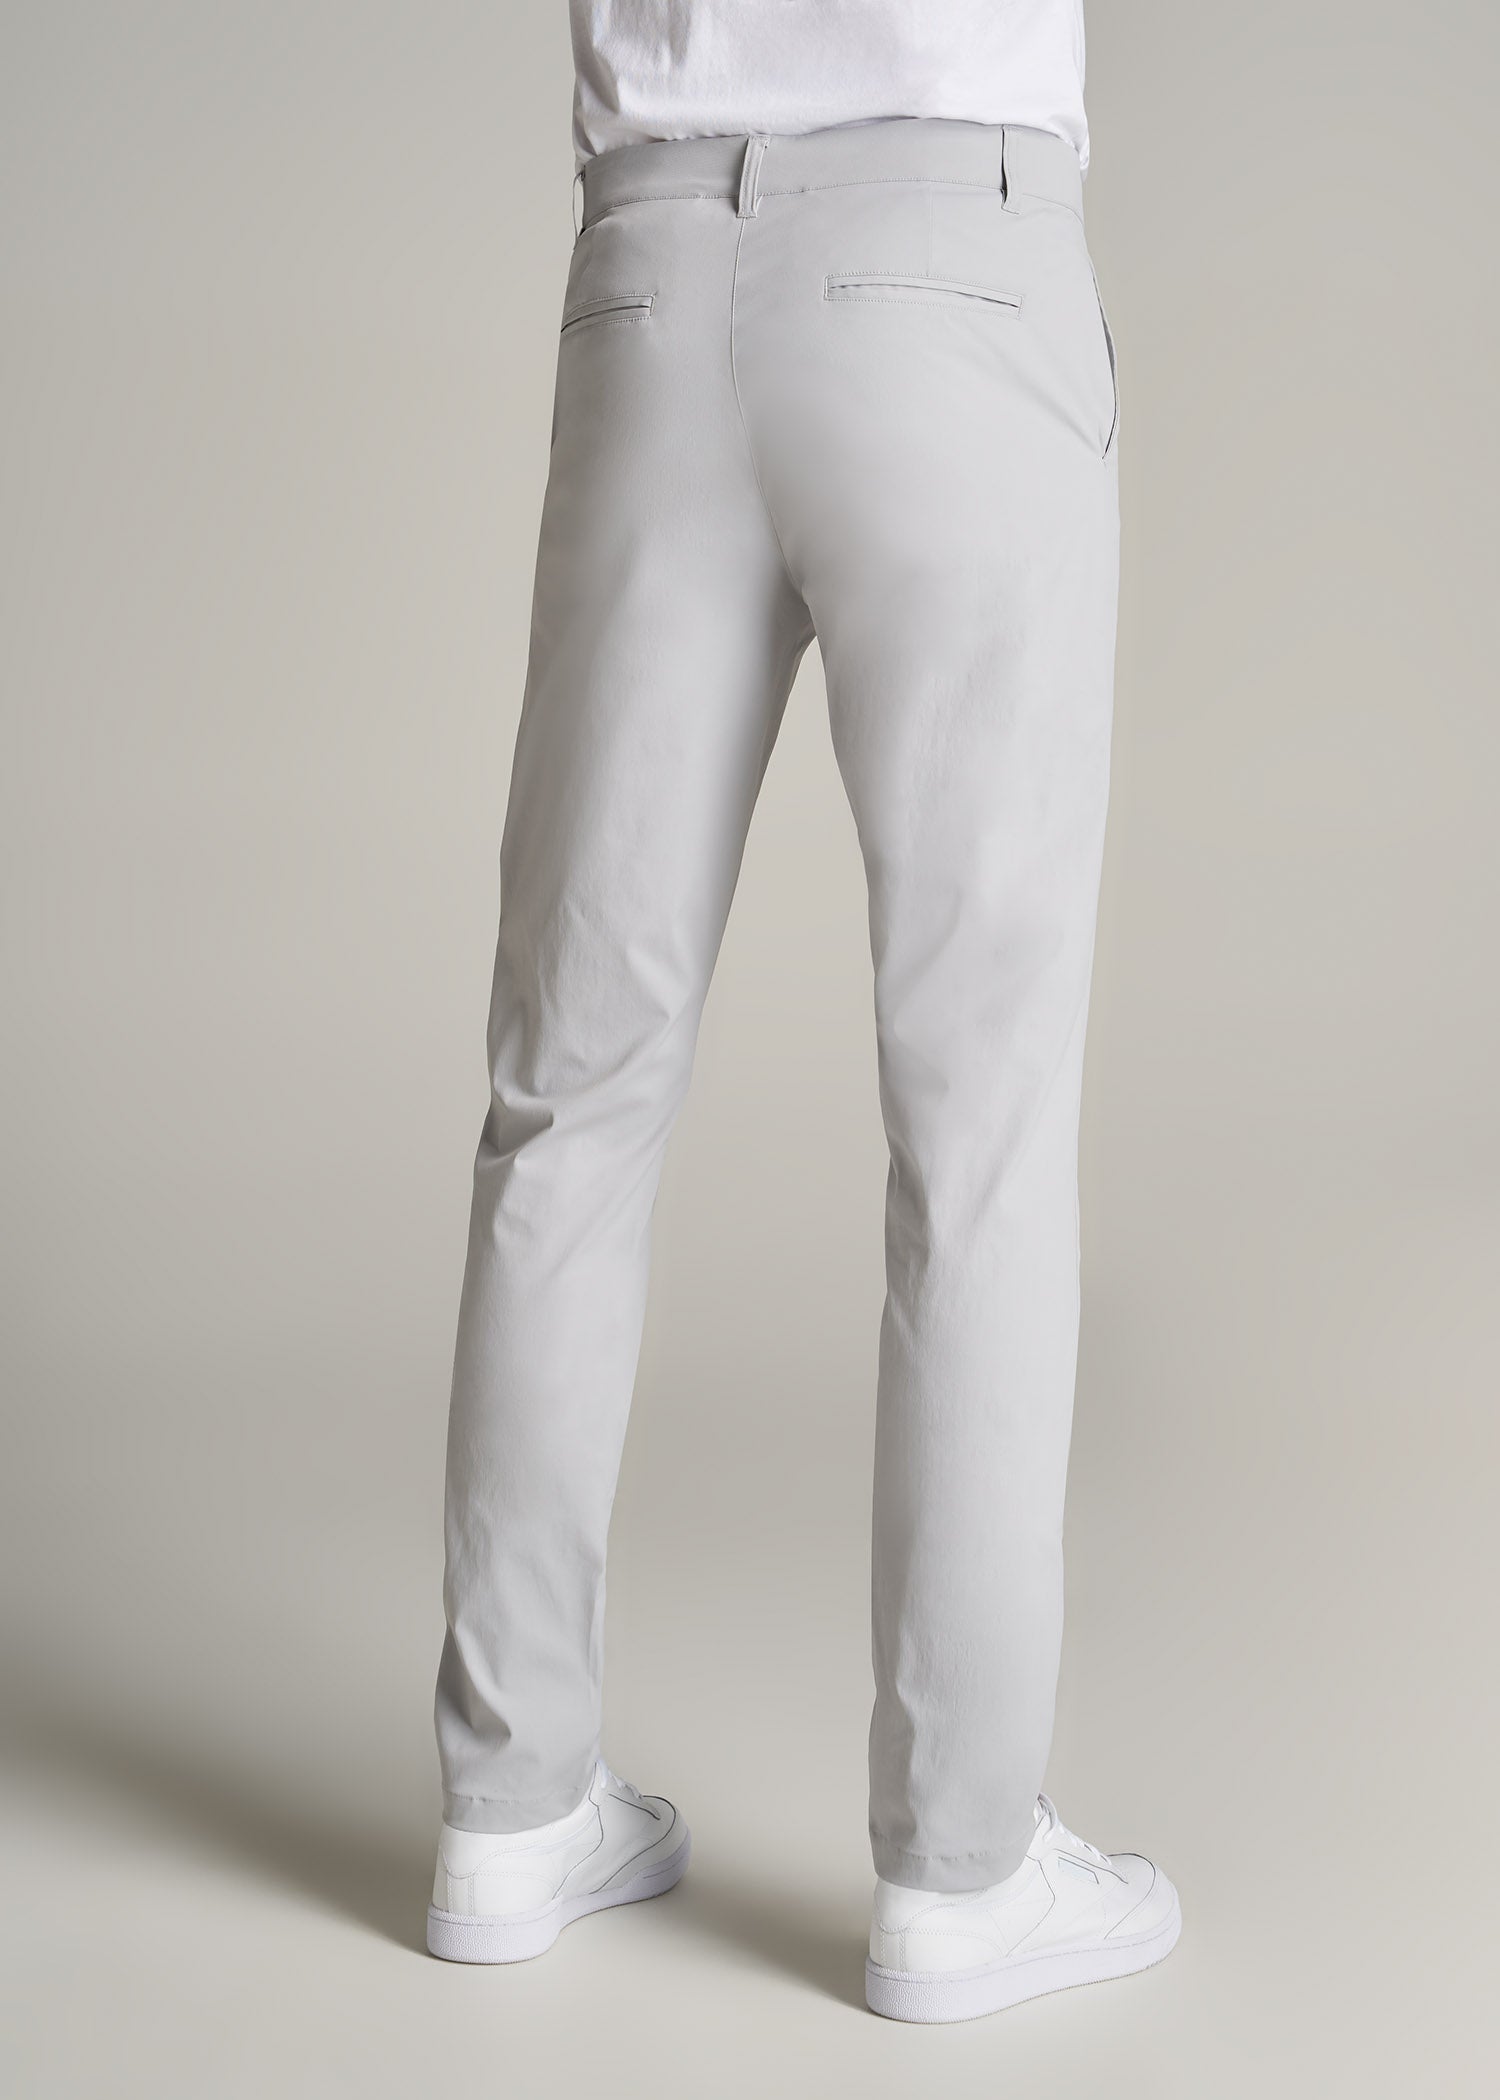 MEN'S WHITE PLEATED DRESS PANTS SLACKS TROUSERS WHITE BELT CUFFED BOTTOMS  NEW | eBay